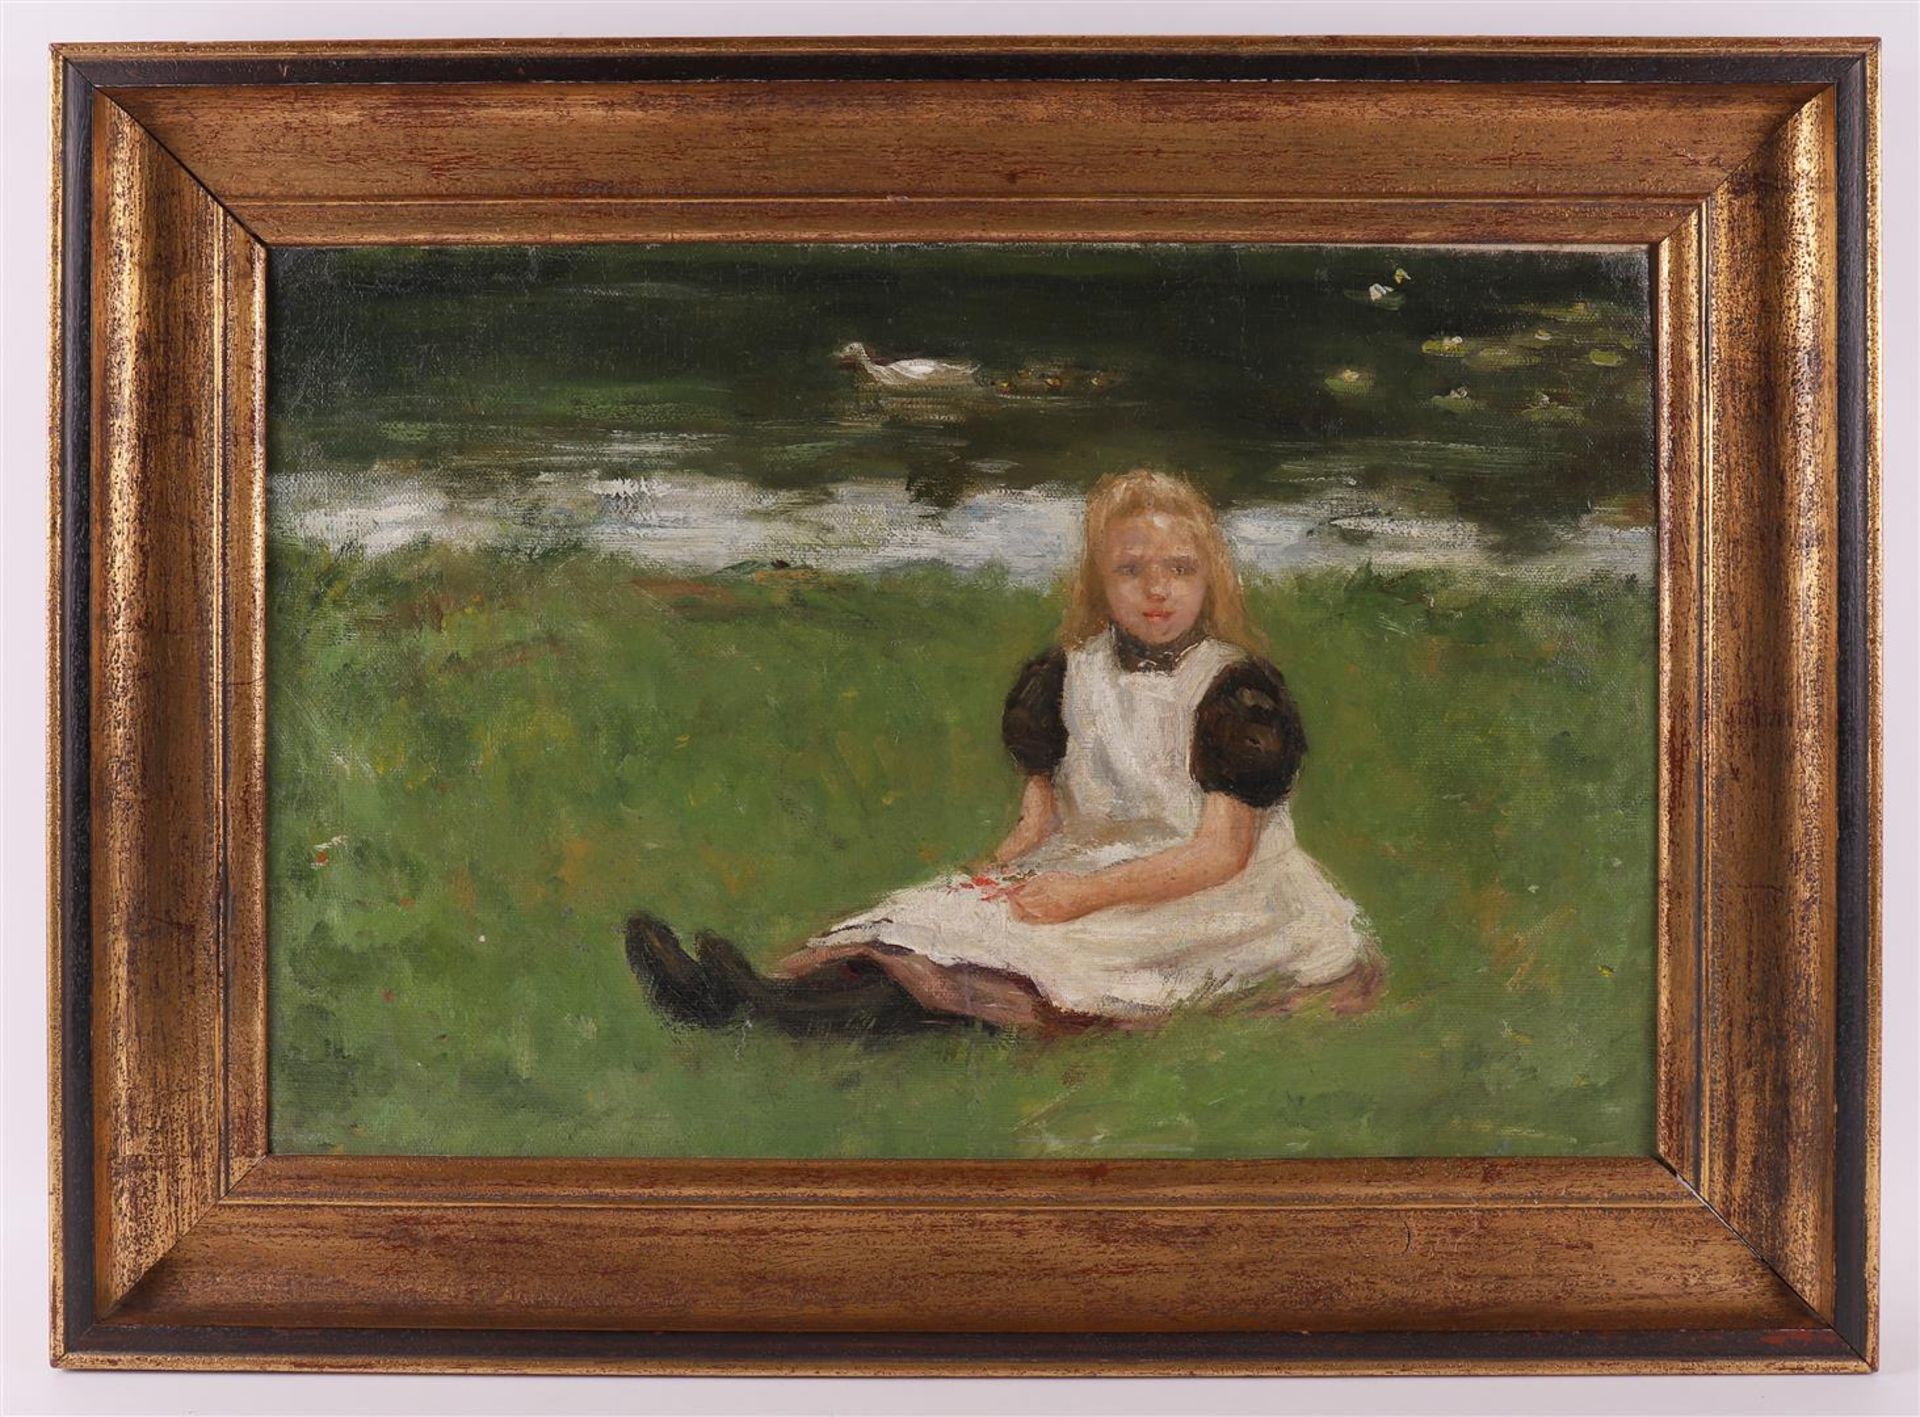 Willem Maris (184401910) “Girl in the grass”,